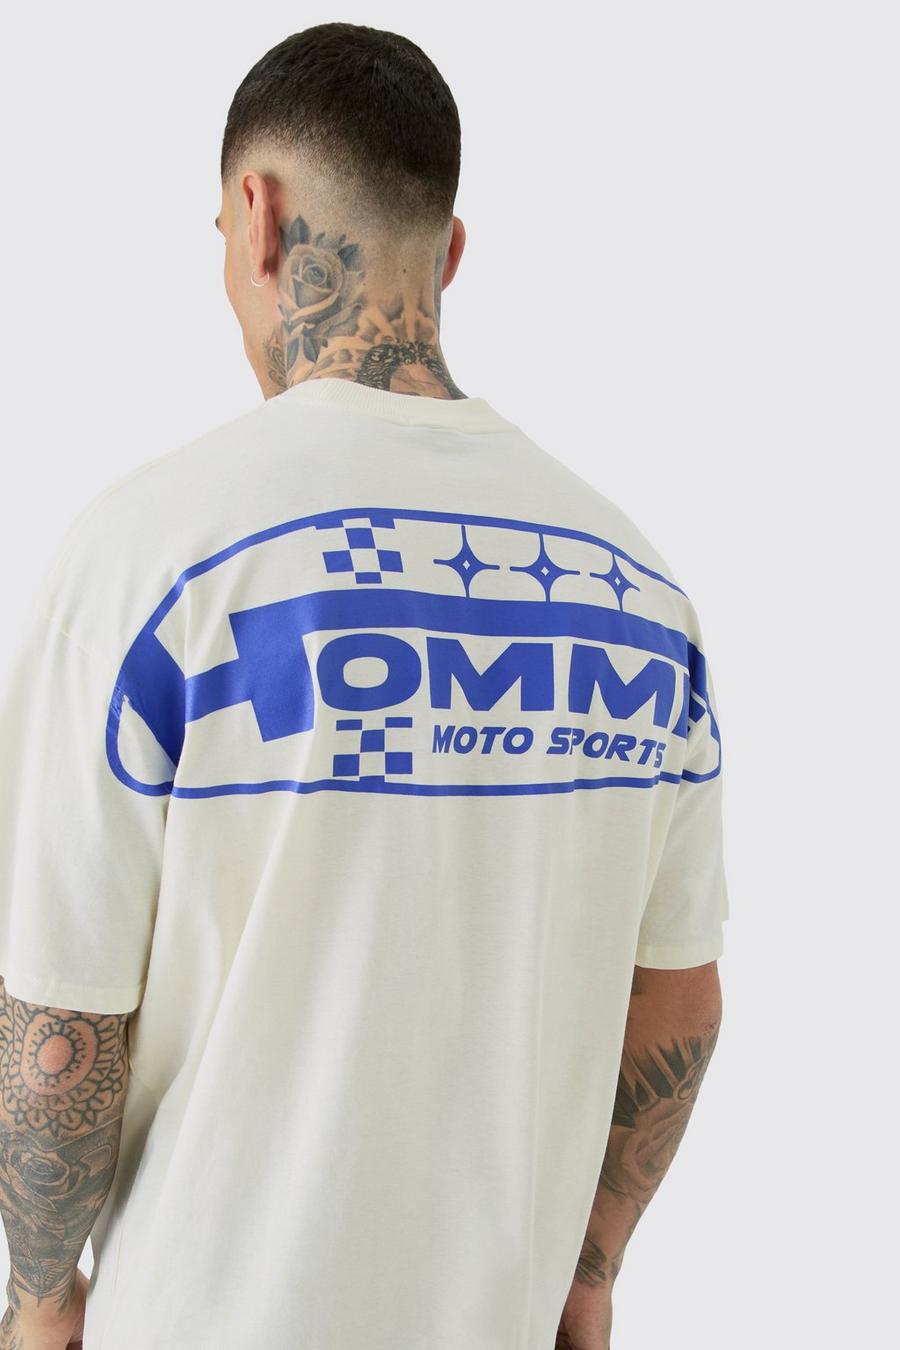 Camiseta Tall con estampado gráfico Homme Moto Sports en color crudo, Ecru